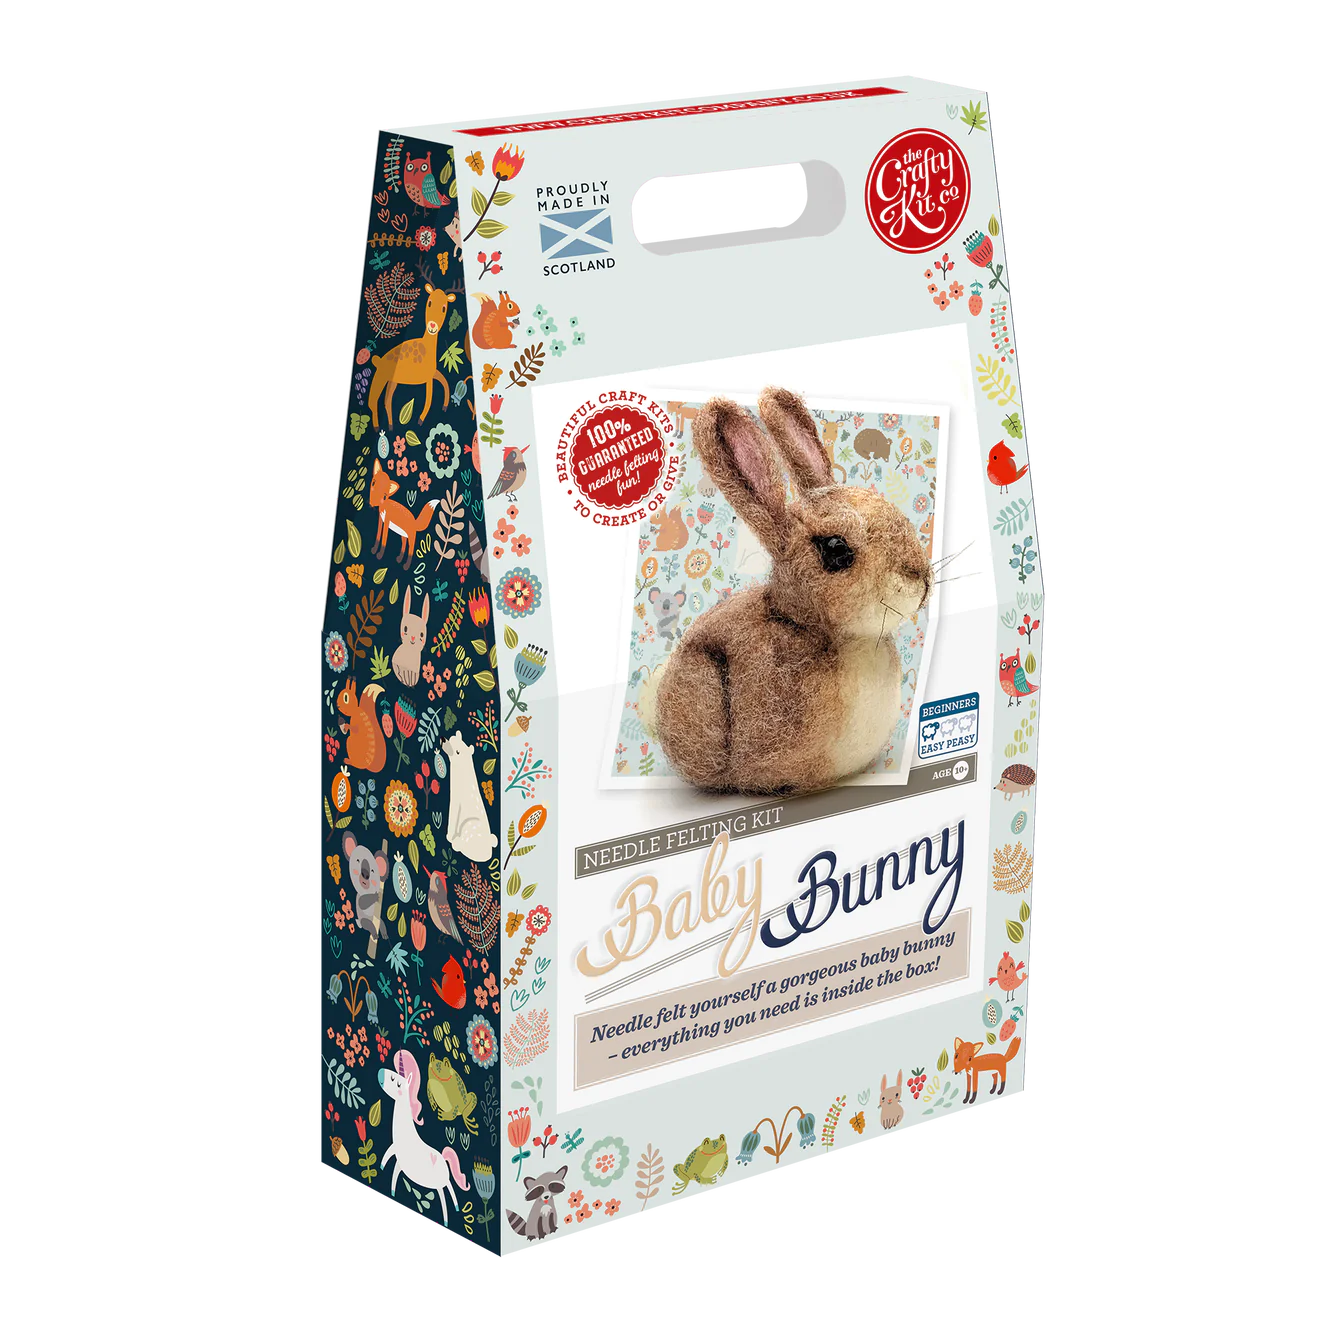 Baby Bunny Rabbit Needle Felting Kit